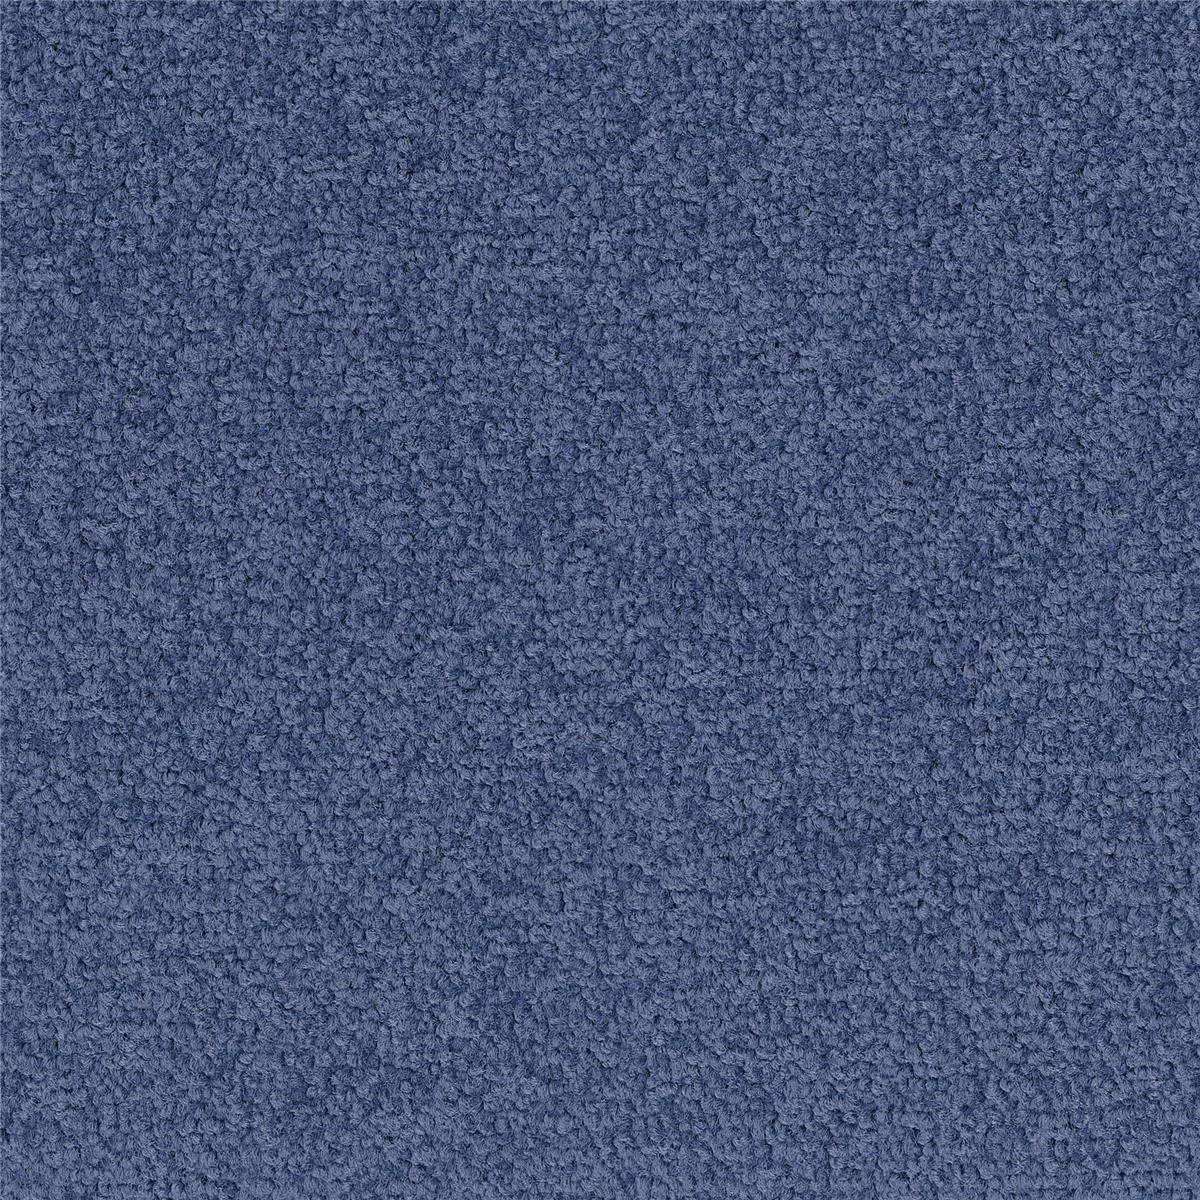 Teppichfliesen 50 x 50 cm Velours Palatino A072 8803 Blau Allover